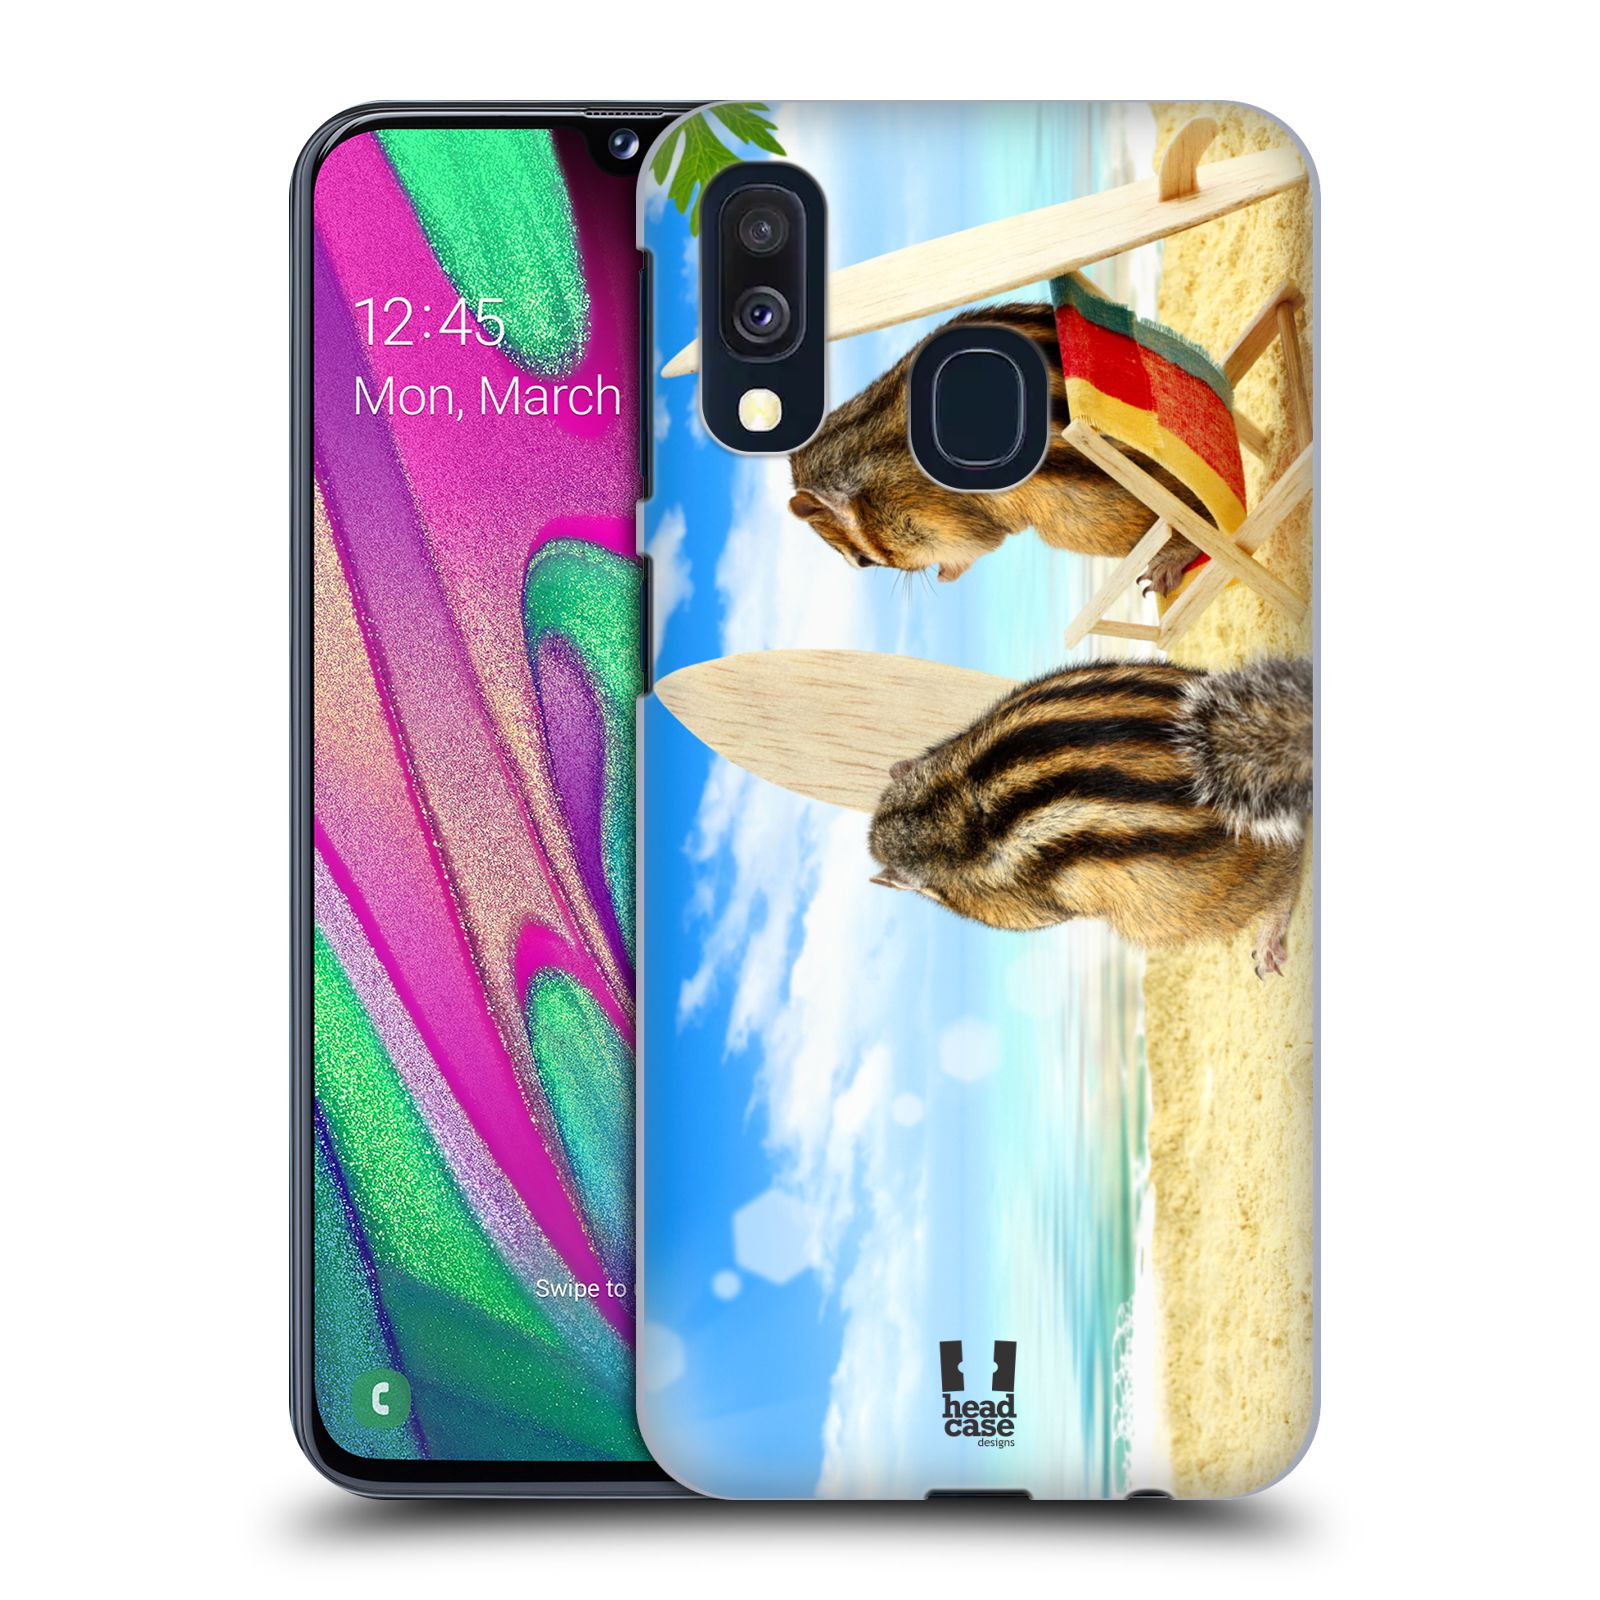 Pouzdro na mobil Samsung Galaxy A40 - HEAD CASE - vzor Legrační zvířátka veverky surfaři u moře